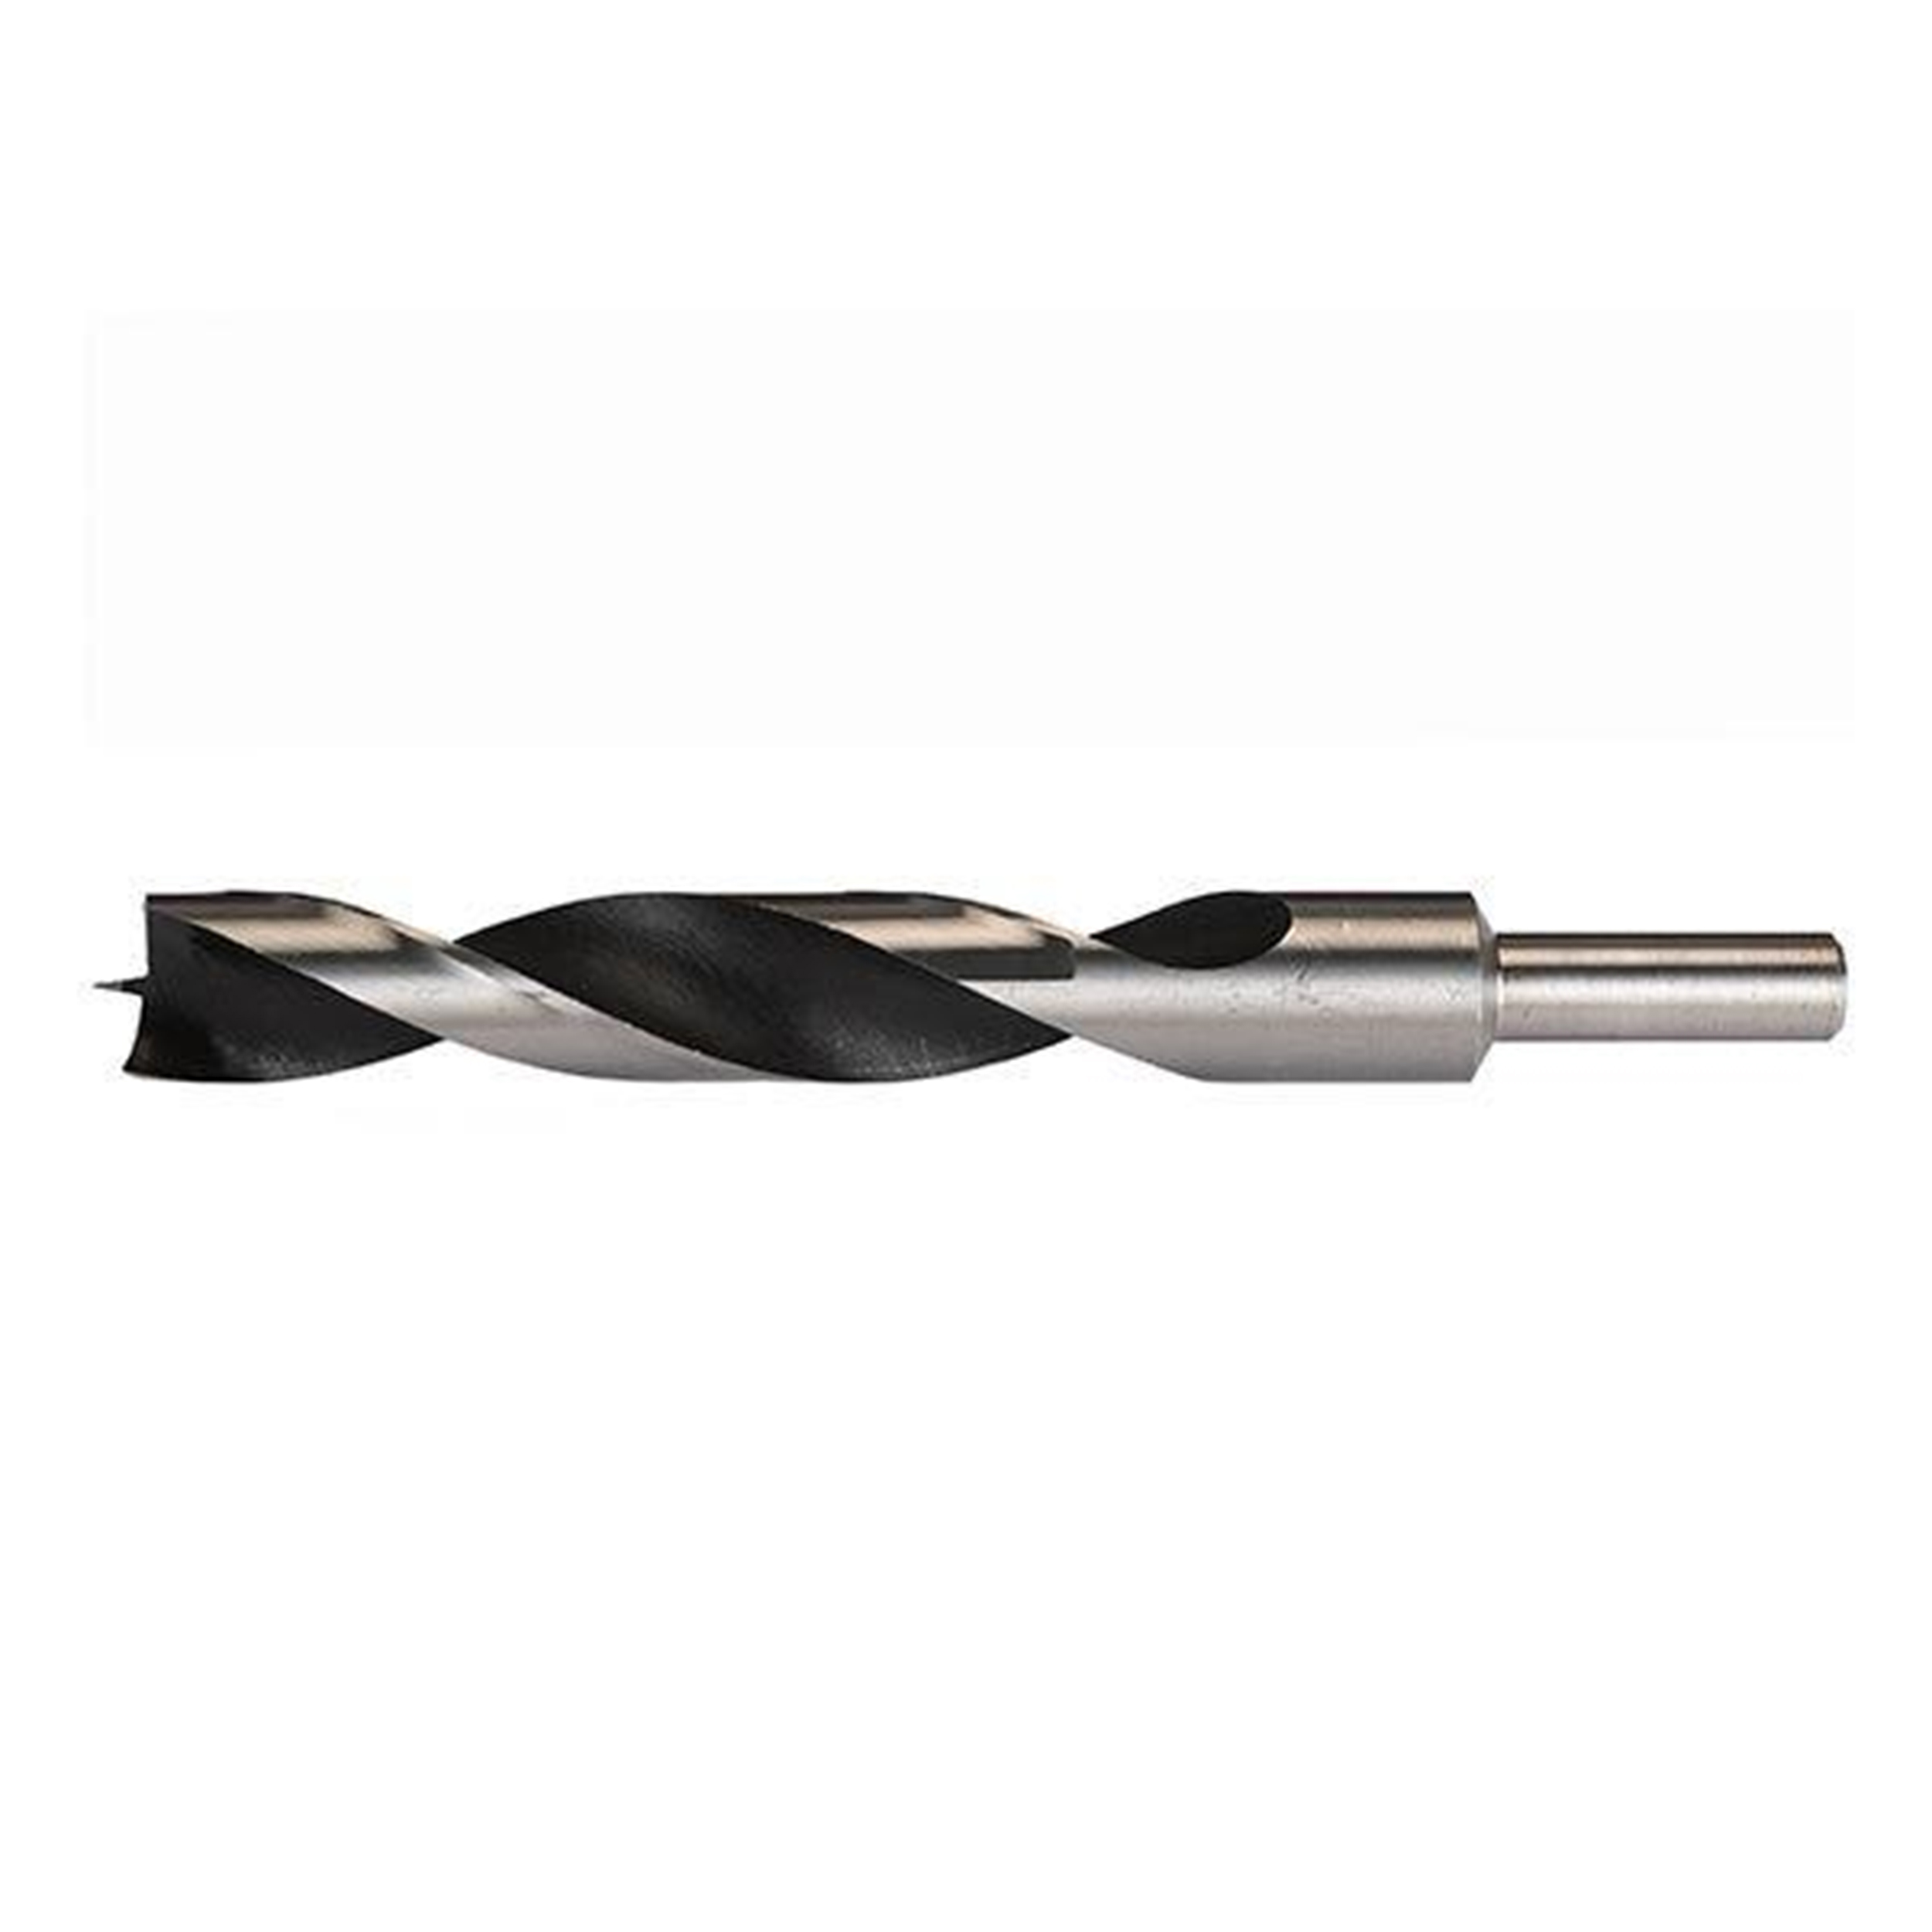 7/8-inch Chrome-vanadium Steel Brad Point Drill Bit